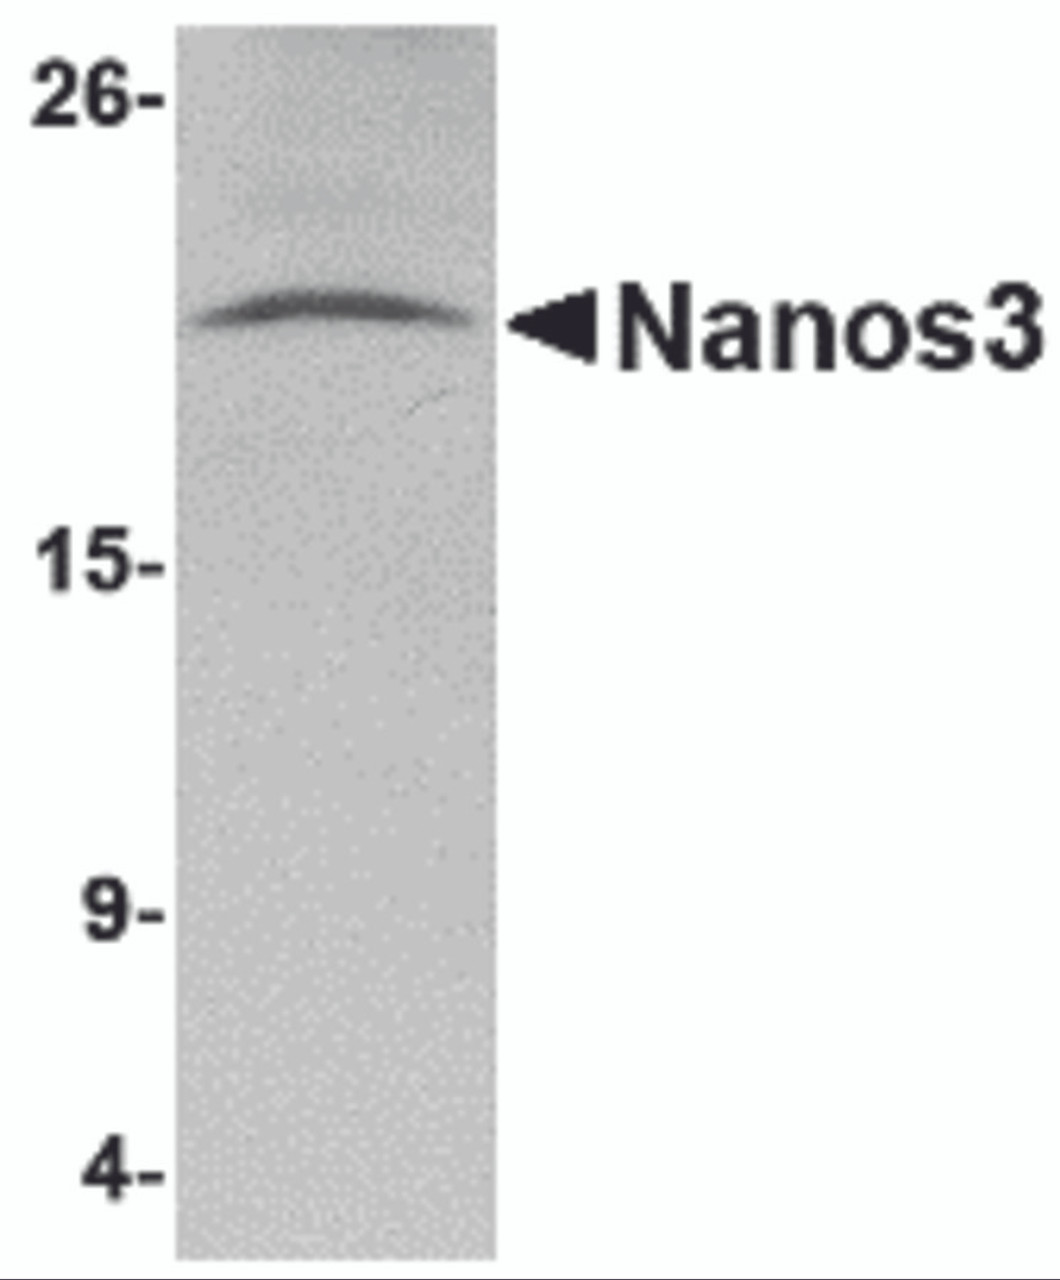 Western blot analysis of Nanos3 in human brain tissue lysate with Nanos3 antibody at 2 &#956;g/mL.